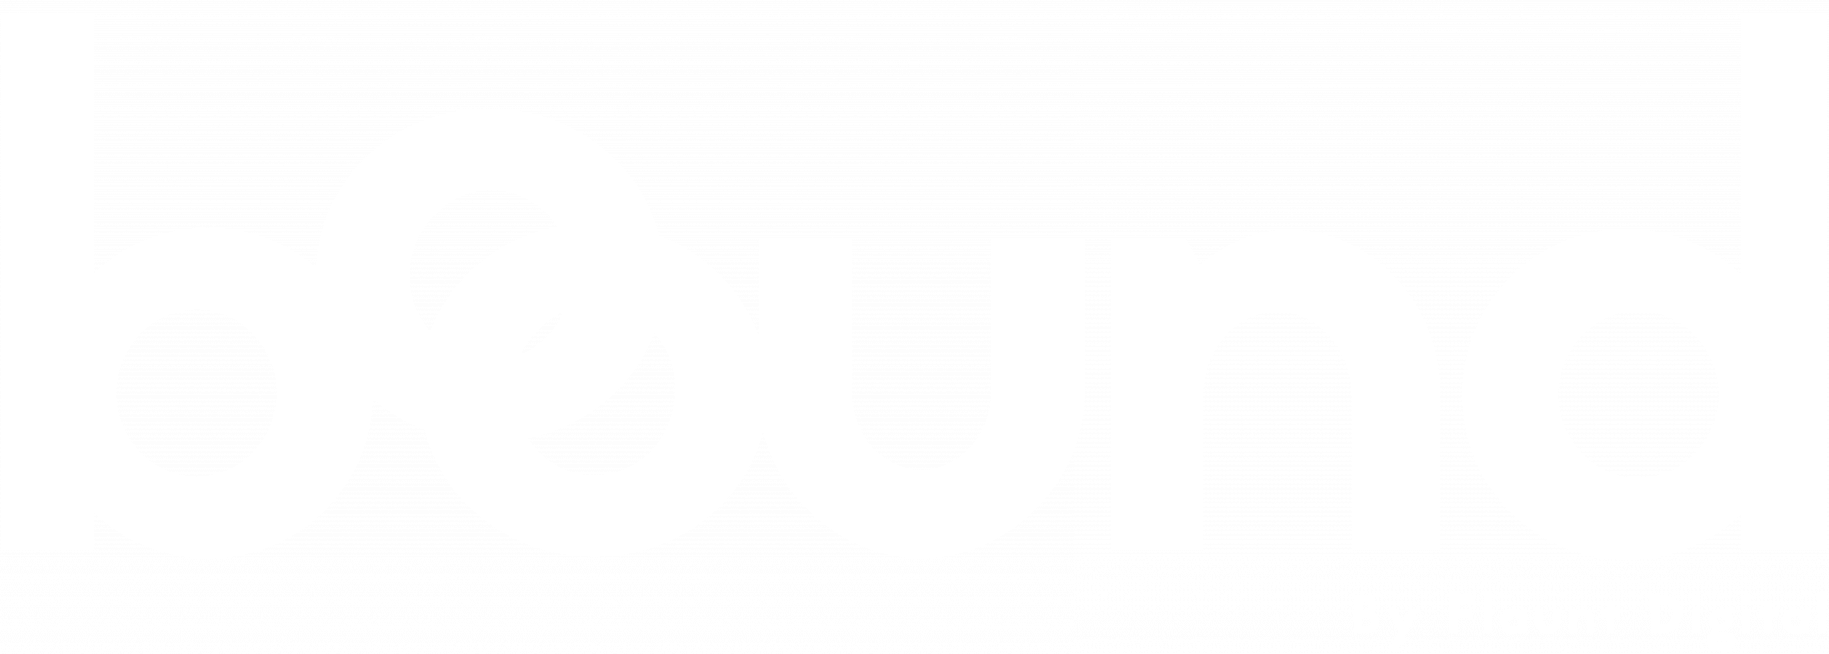 Bound-logo